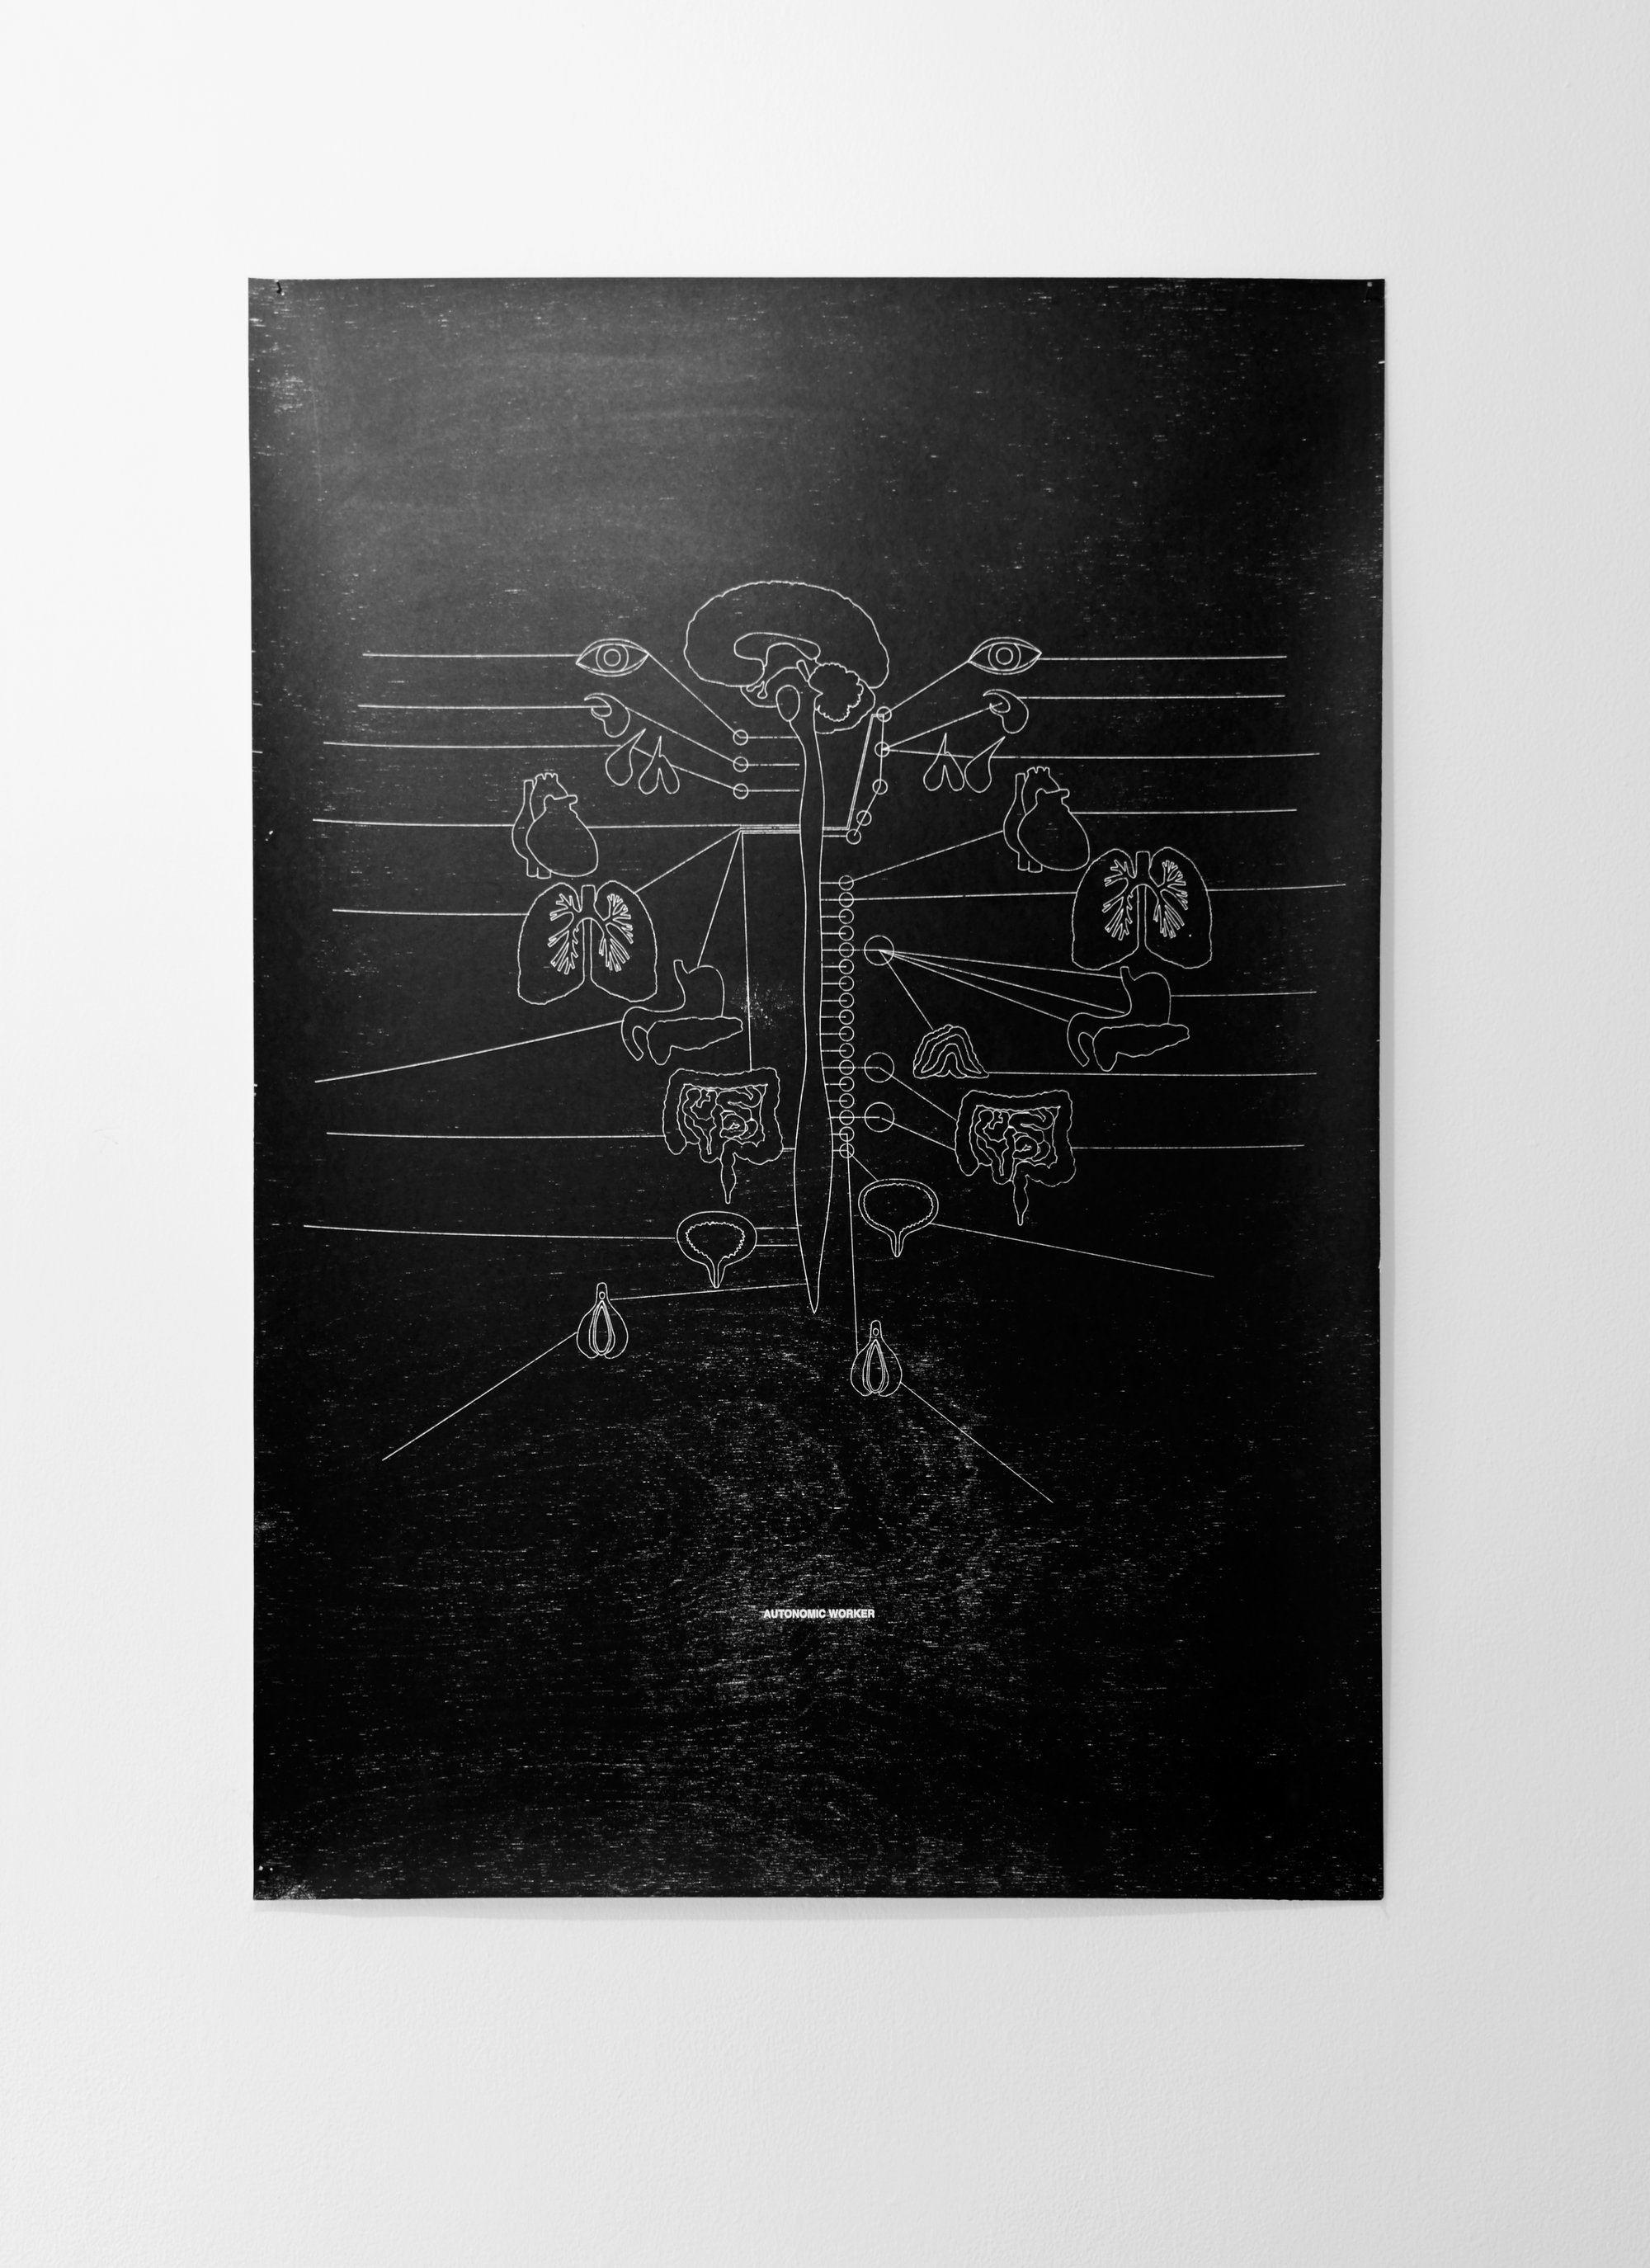 Sidsel Meineche Hansen, Autonomic Worker, laser woodcut on paper, mounted on aluminium under museum glass, 101.3 x 70.7 cm (39 7/8 x 27 7/8 in), 2013/2016